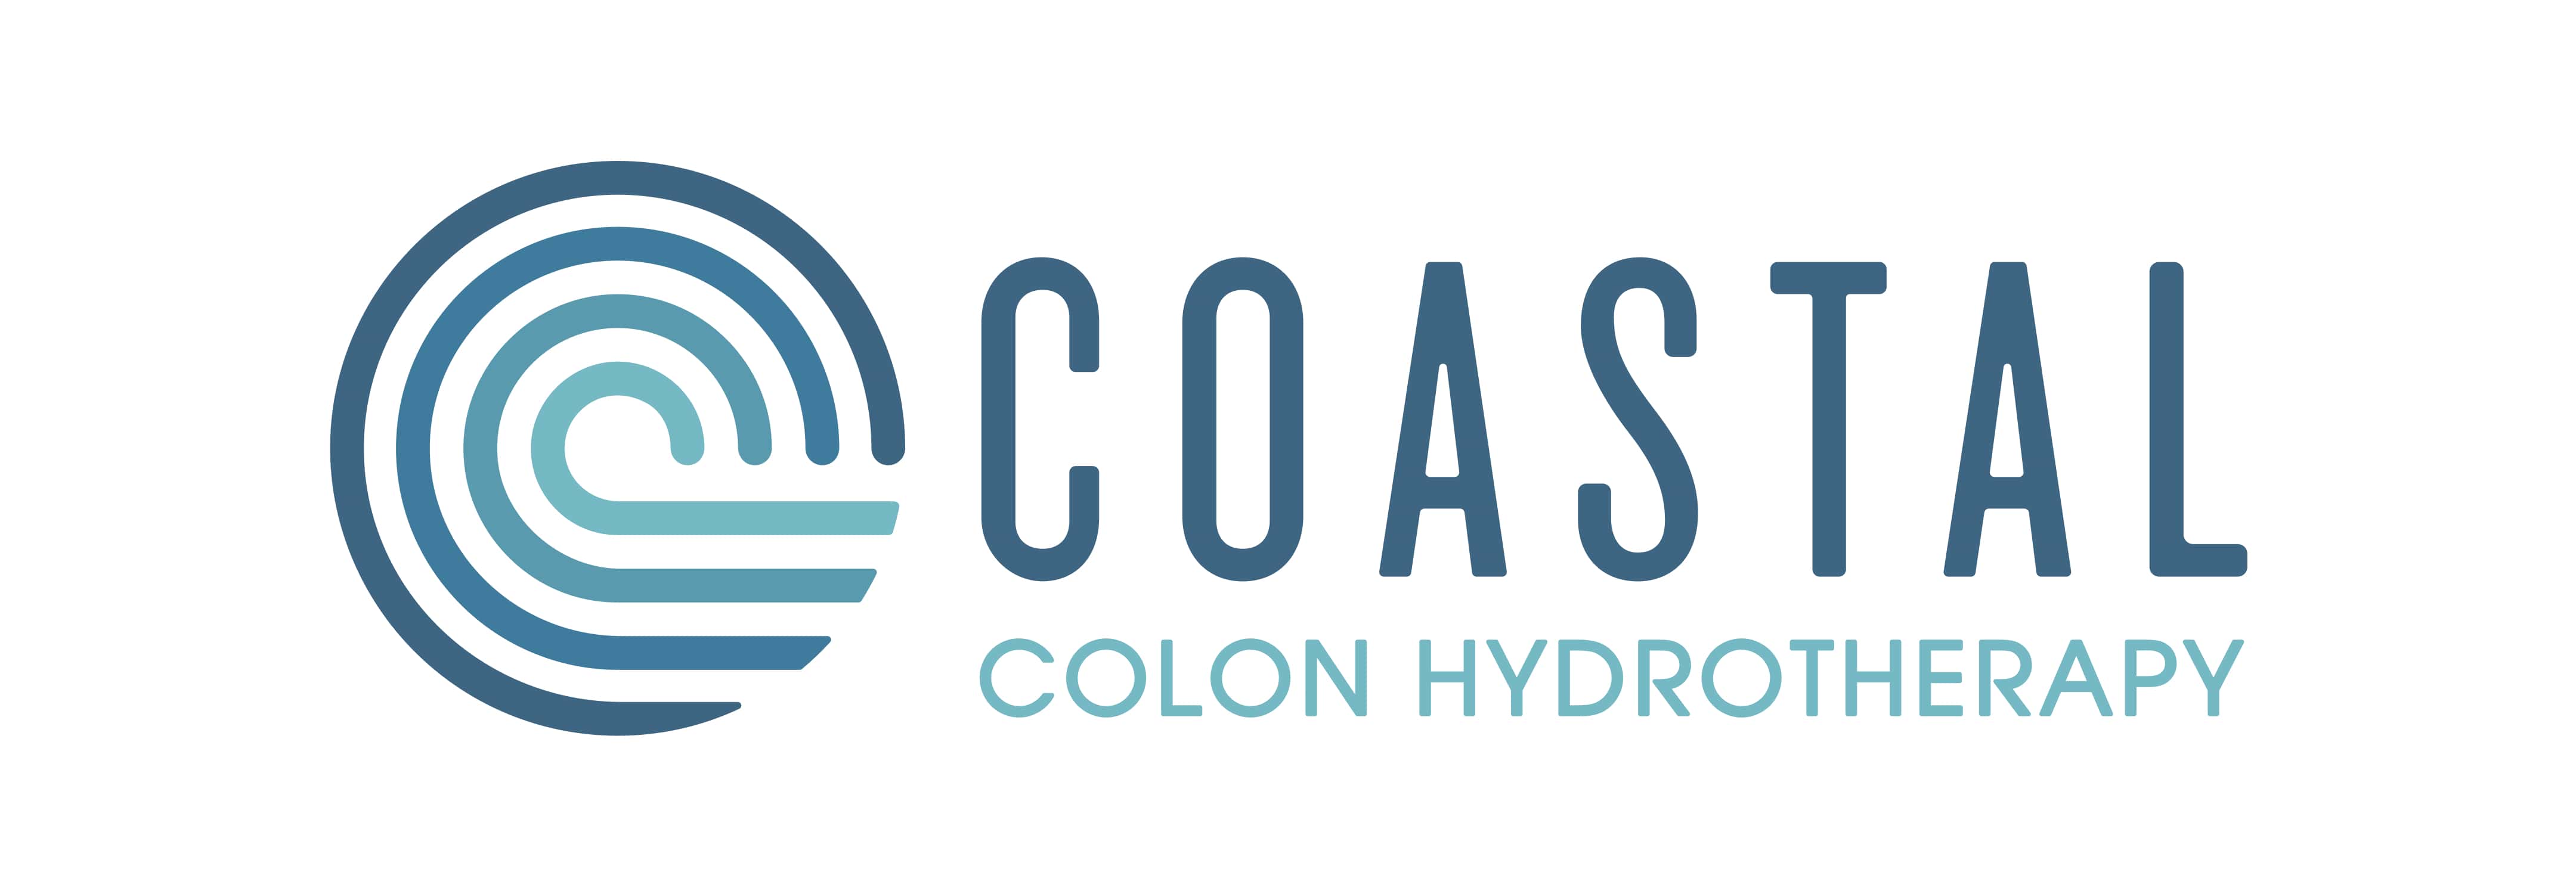 Coastal Colon Hydrotherapy logo